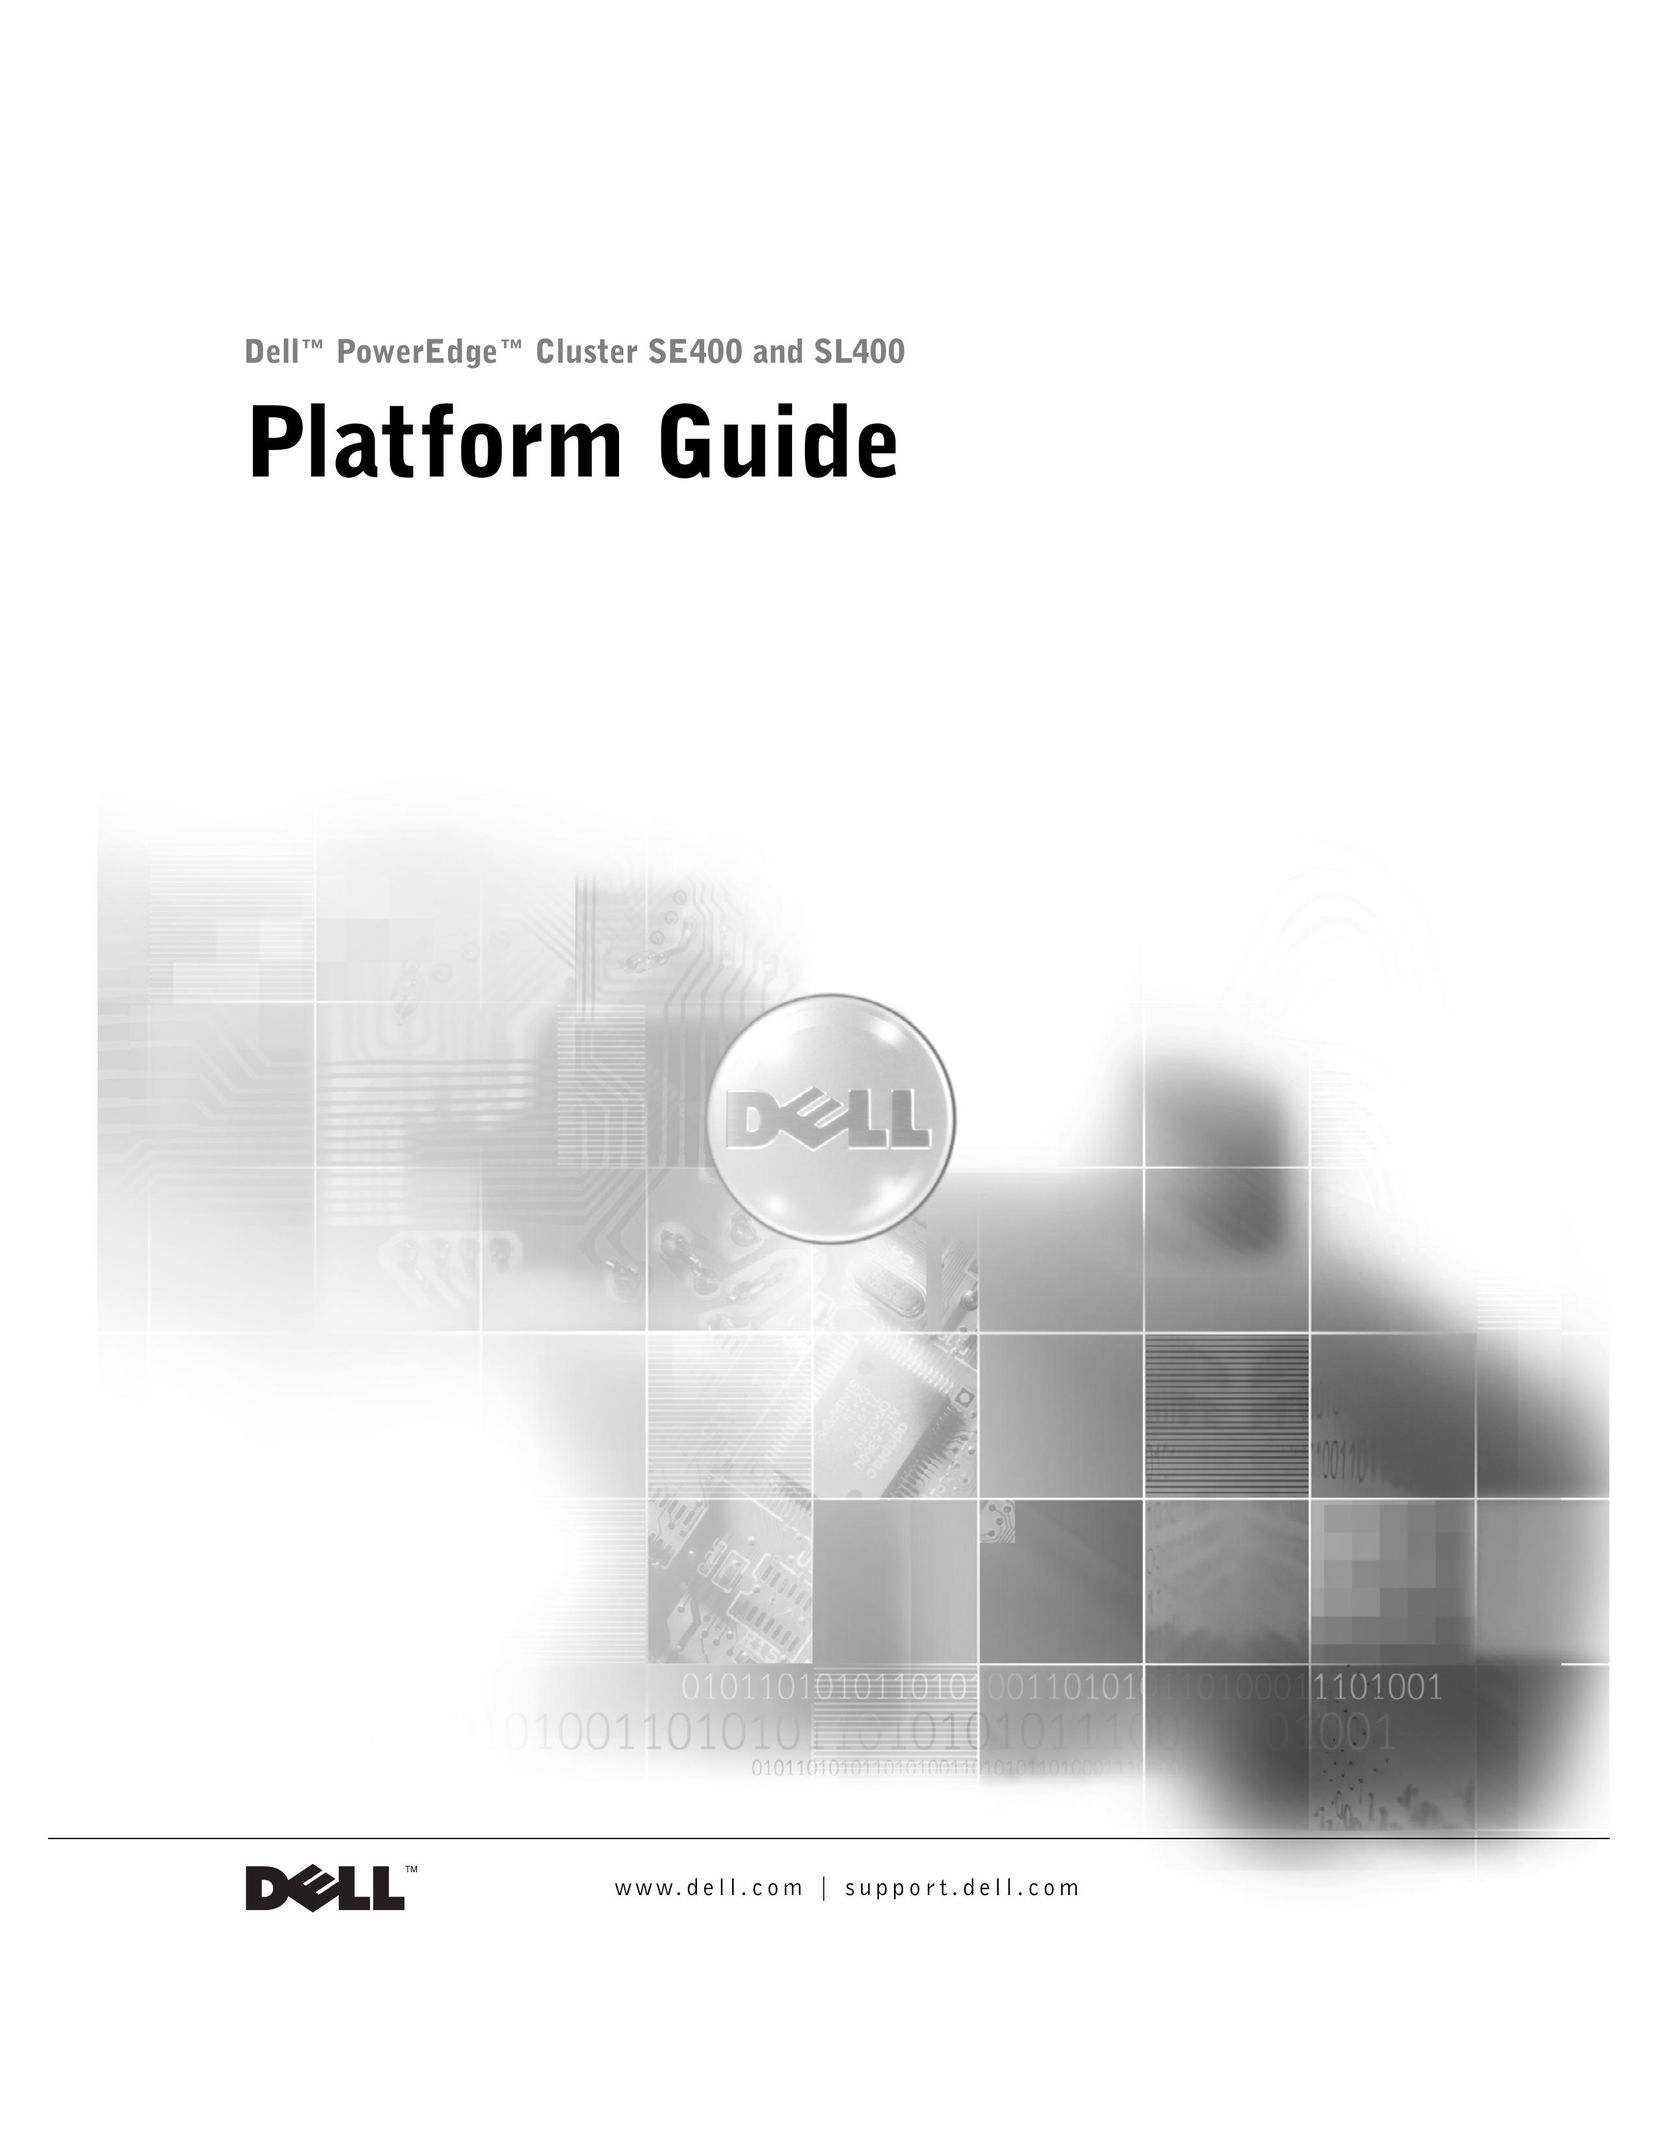 Dell SL400 Network Hardware User Manual